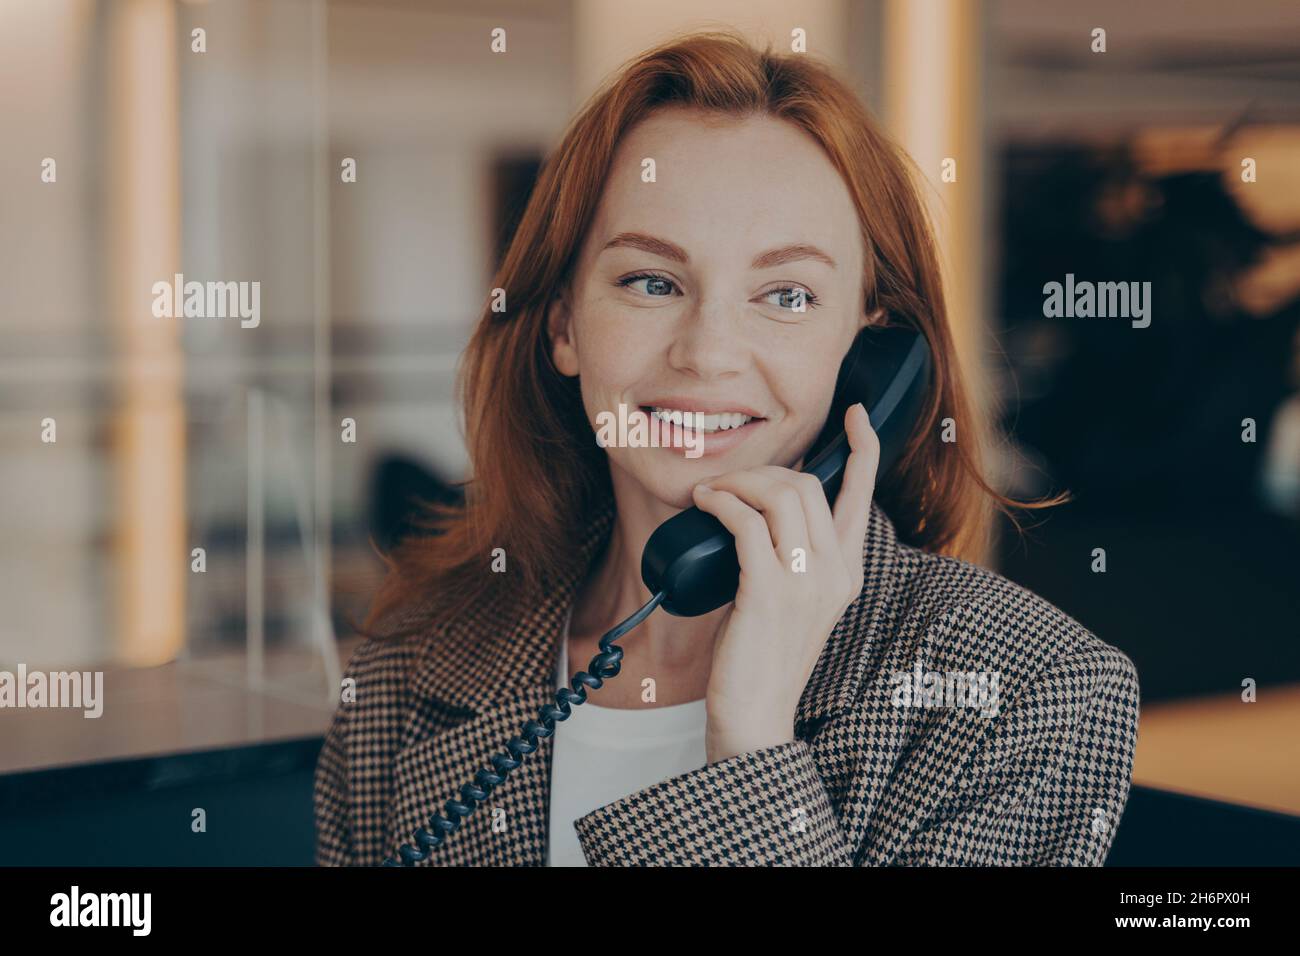 Portrait of satisfied female office worker using black landline phone, calling business partner Stock Photo